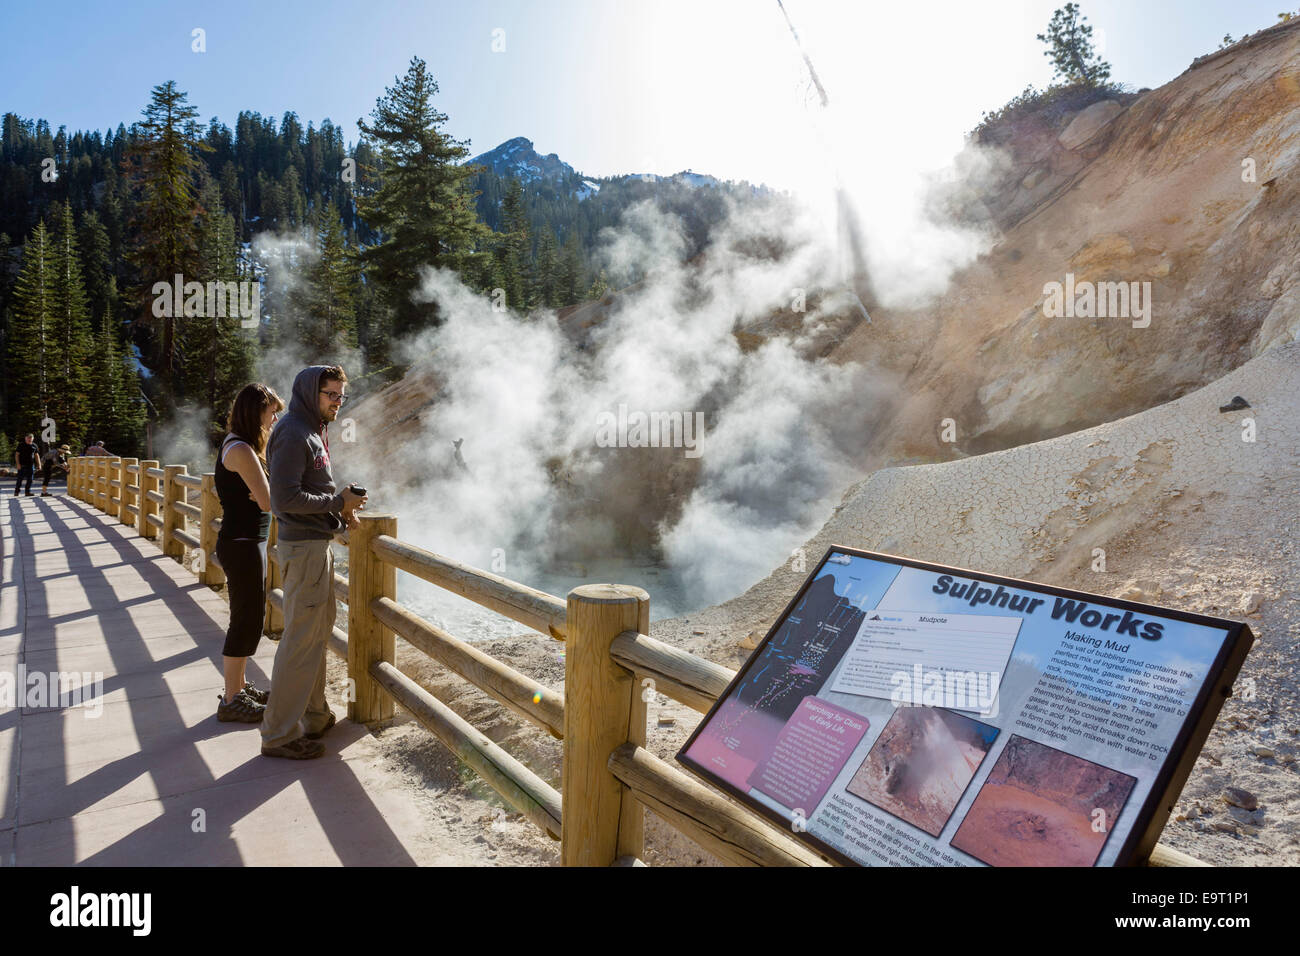 Mudpot at the Sulphur Works geothermal area, Lassen Volcanic National Park, Cascade Range, Northern California, USA Stock Photo